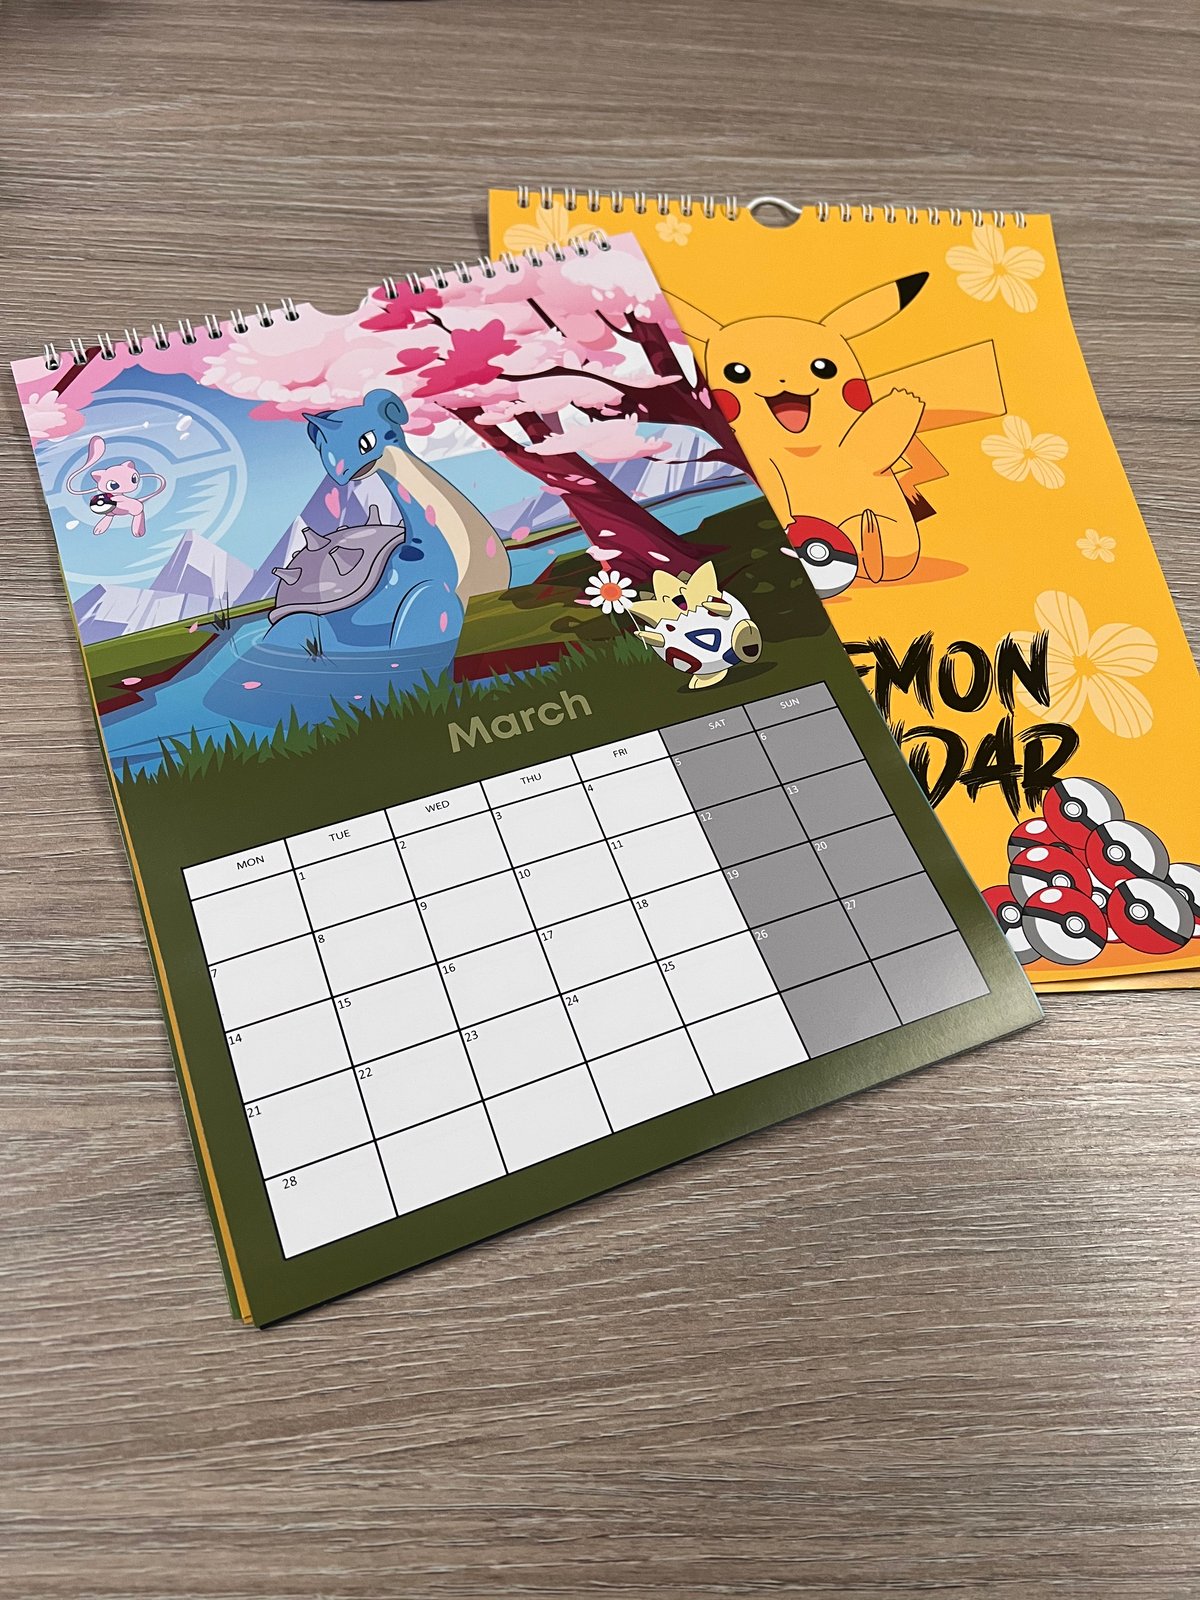 Image of Pokémon Calendar 2024